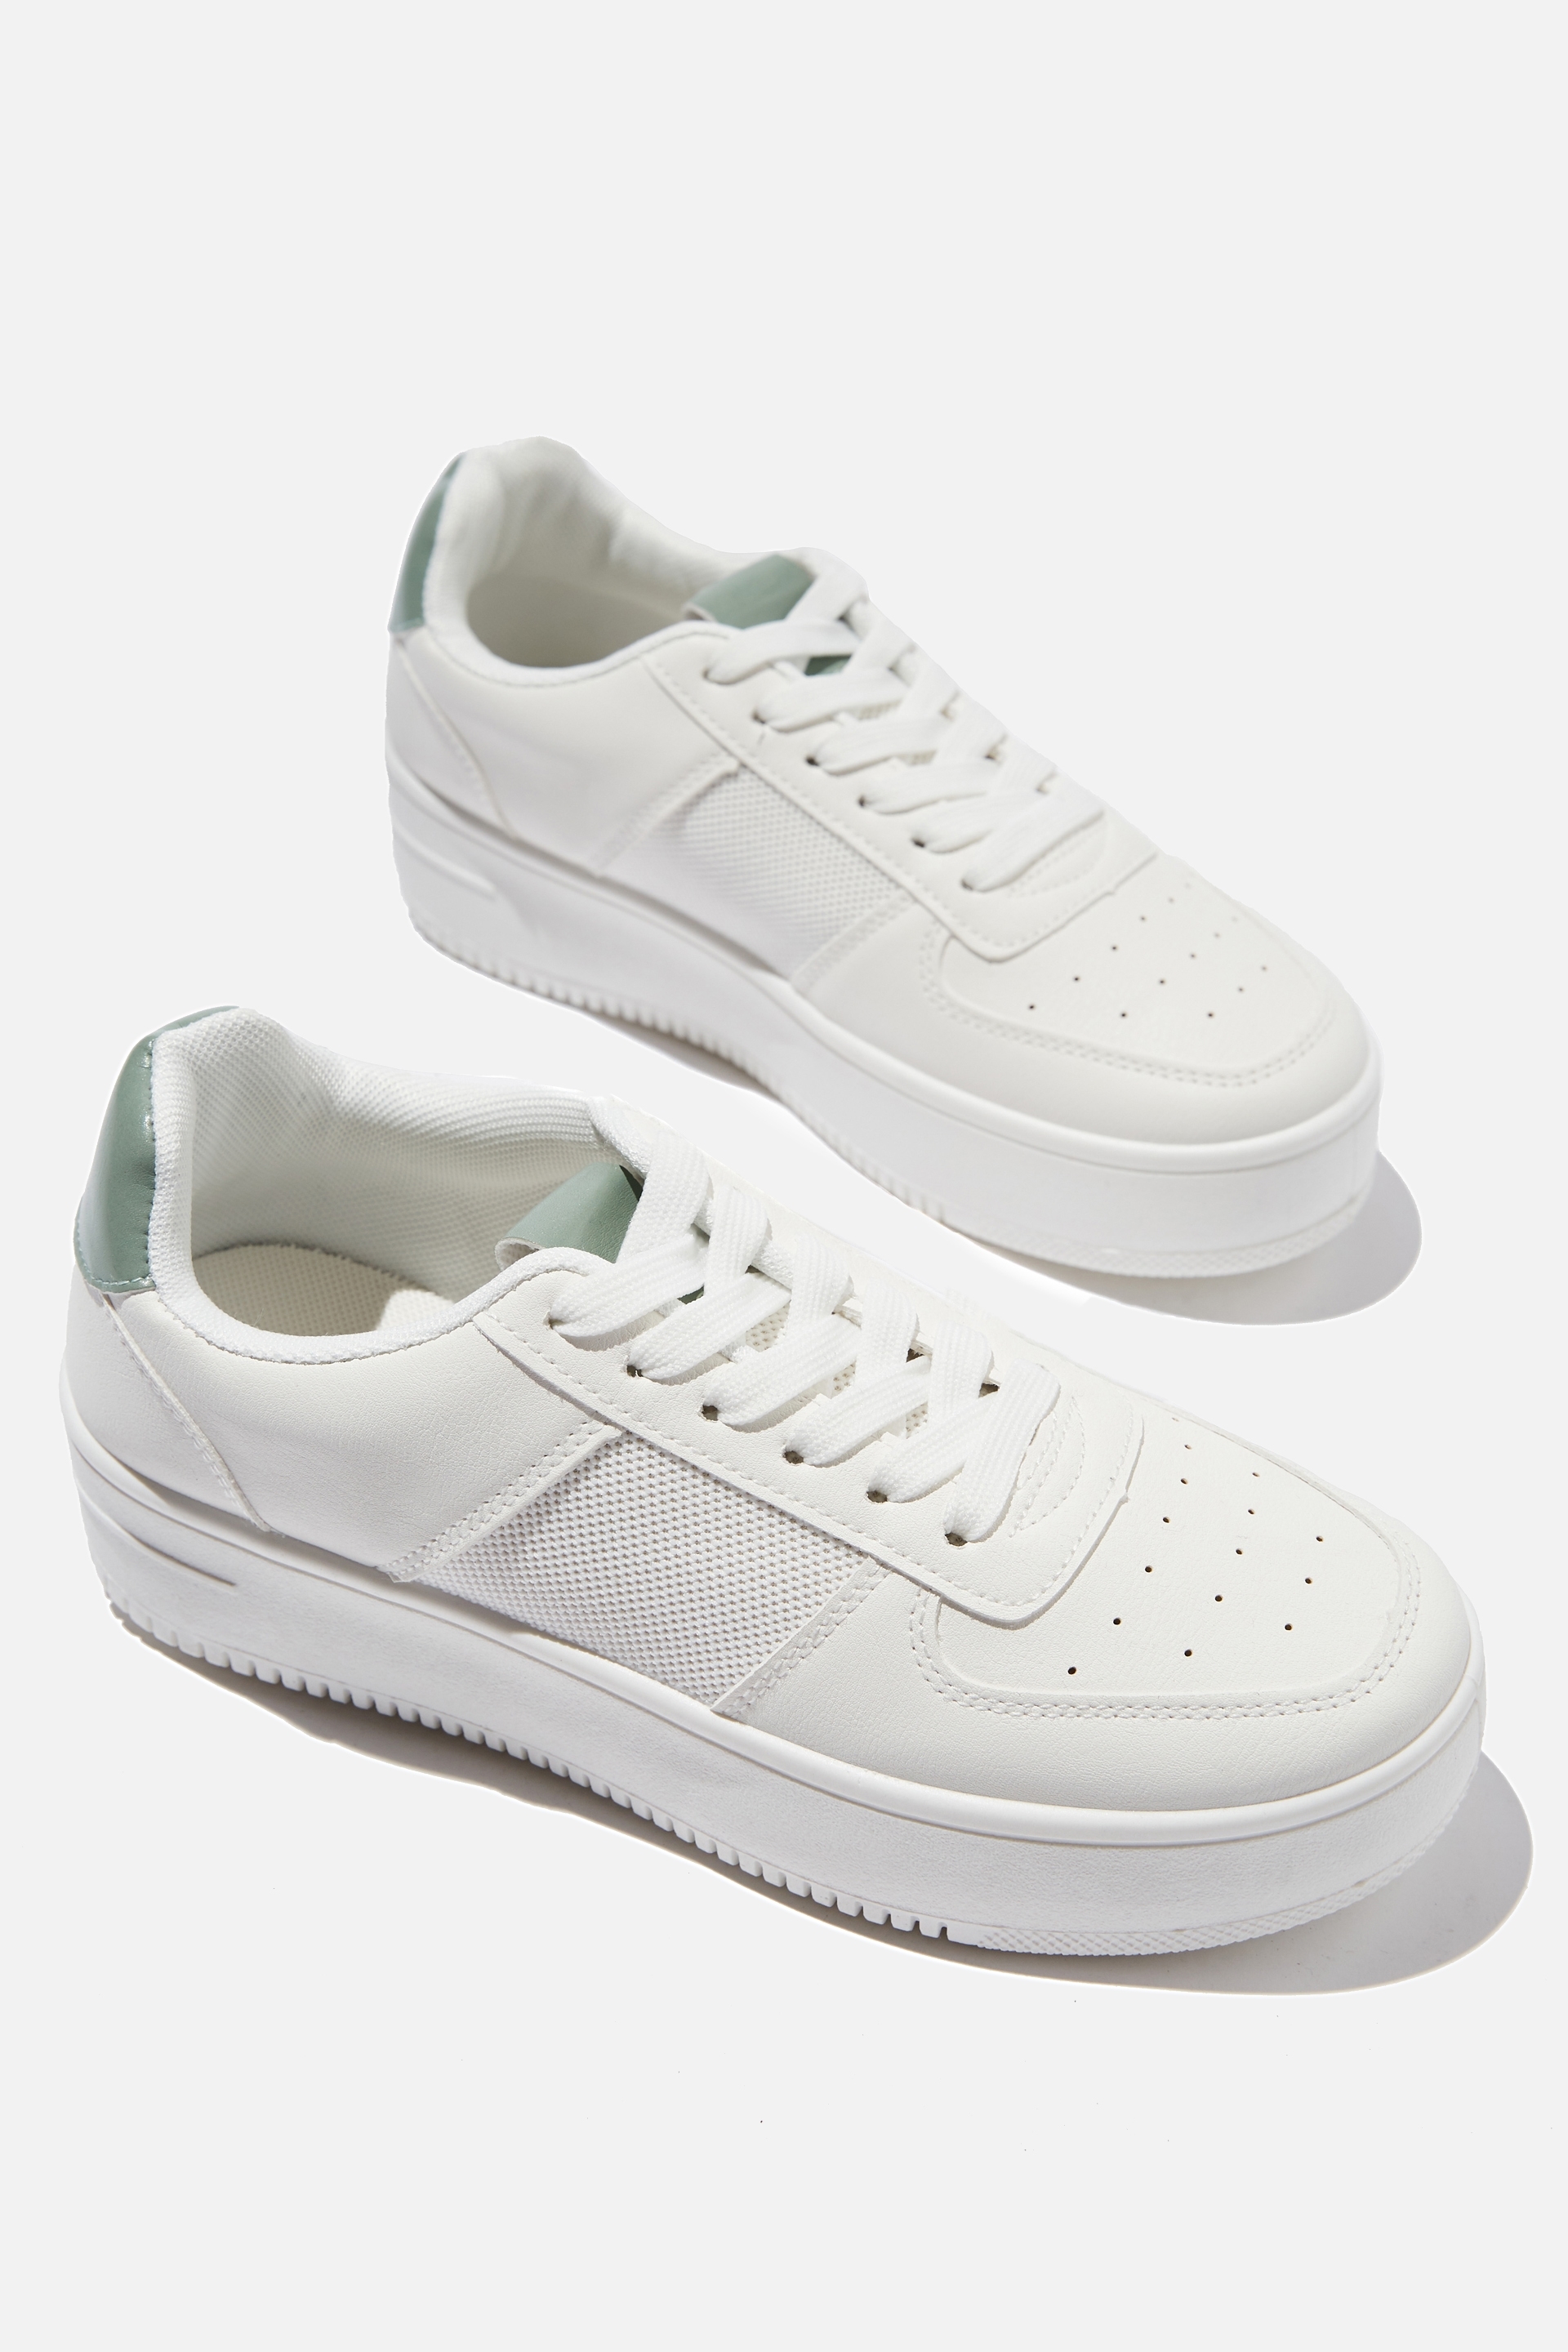 Rubi - Alexa Platform Sneaker - White green